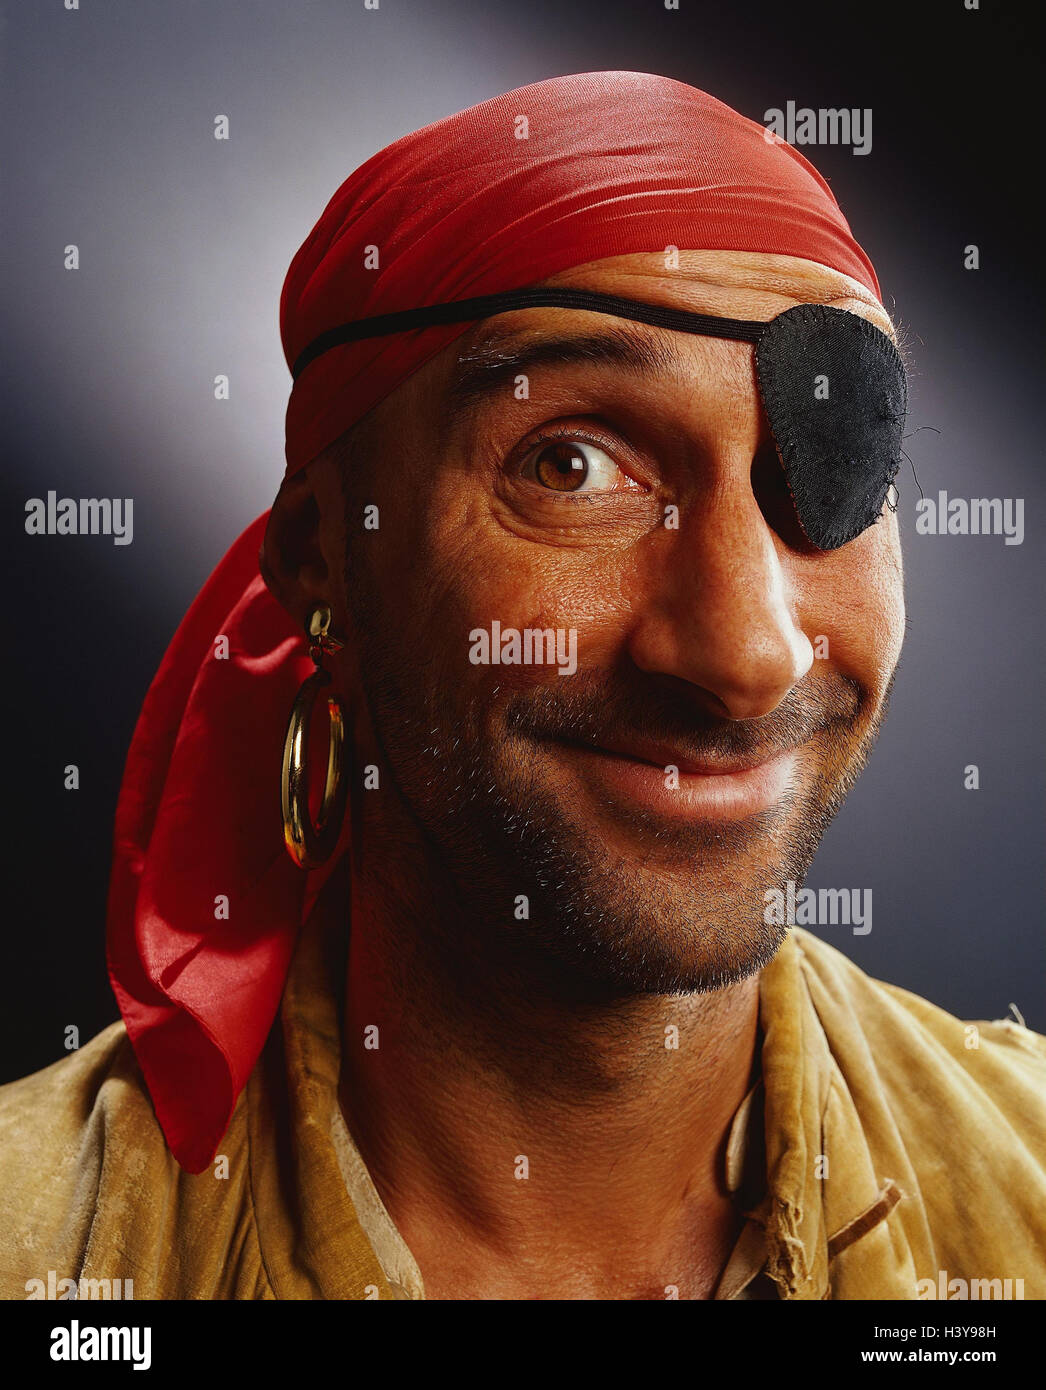 Parche pirata tuerto fotografías e imágenes de alta resolución - Alamy